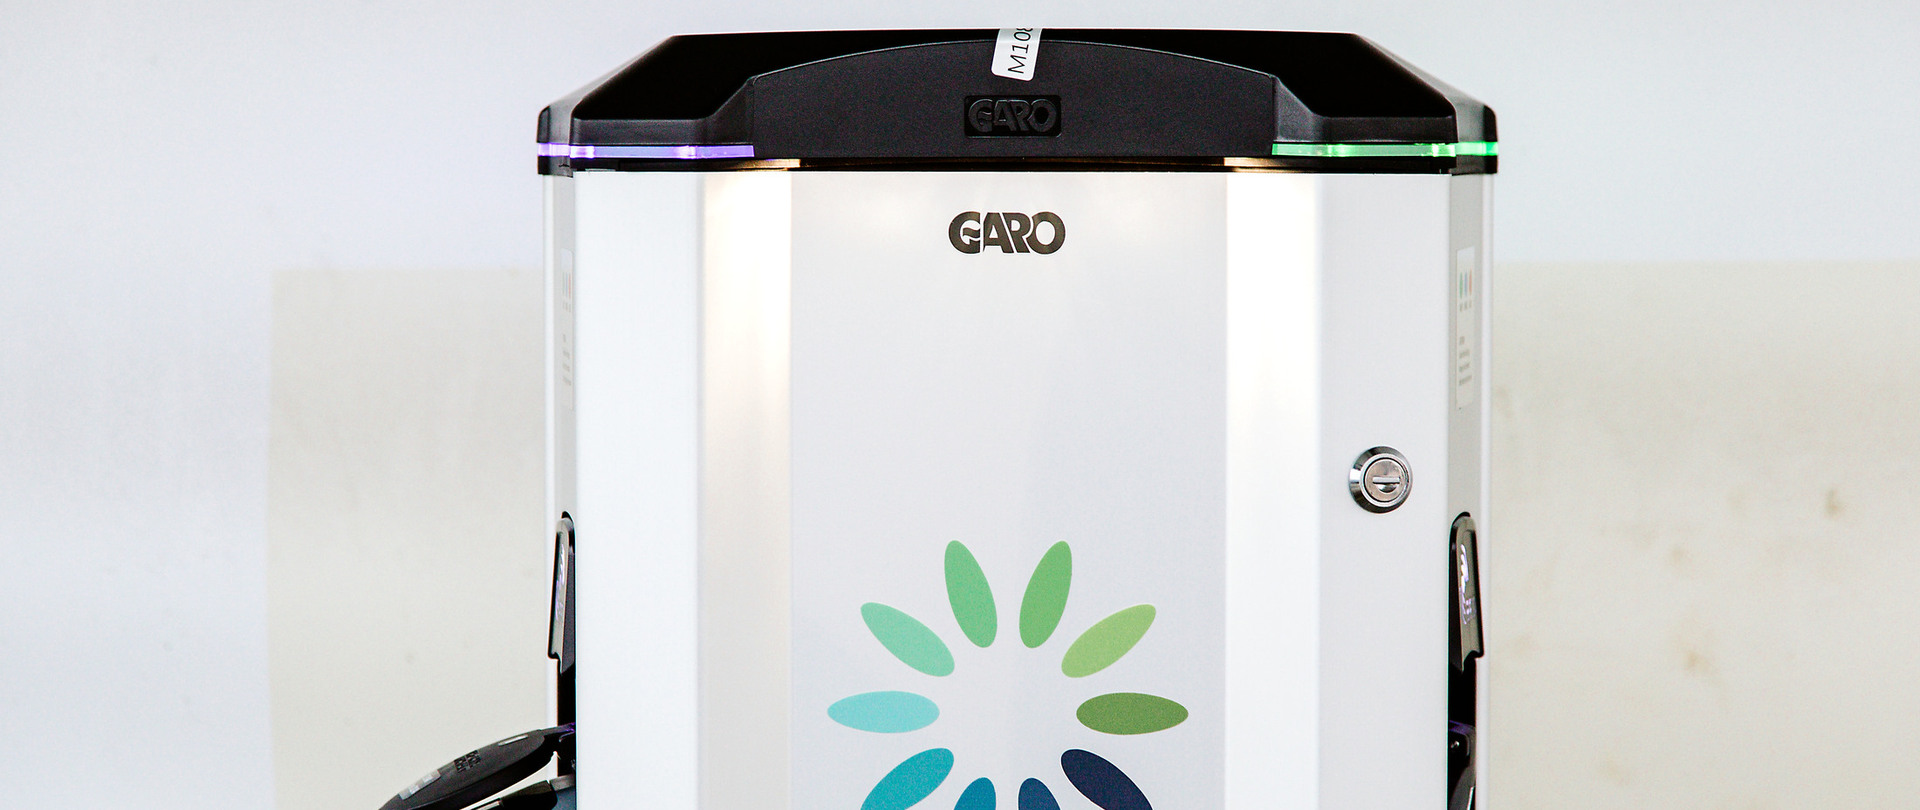 GARO'S Public chargers gain higher IP raiting